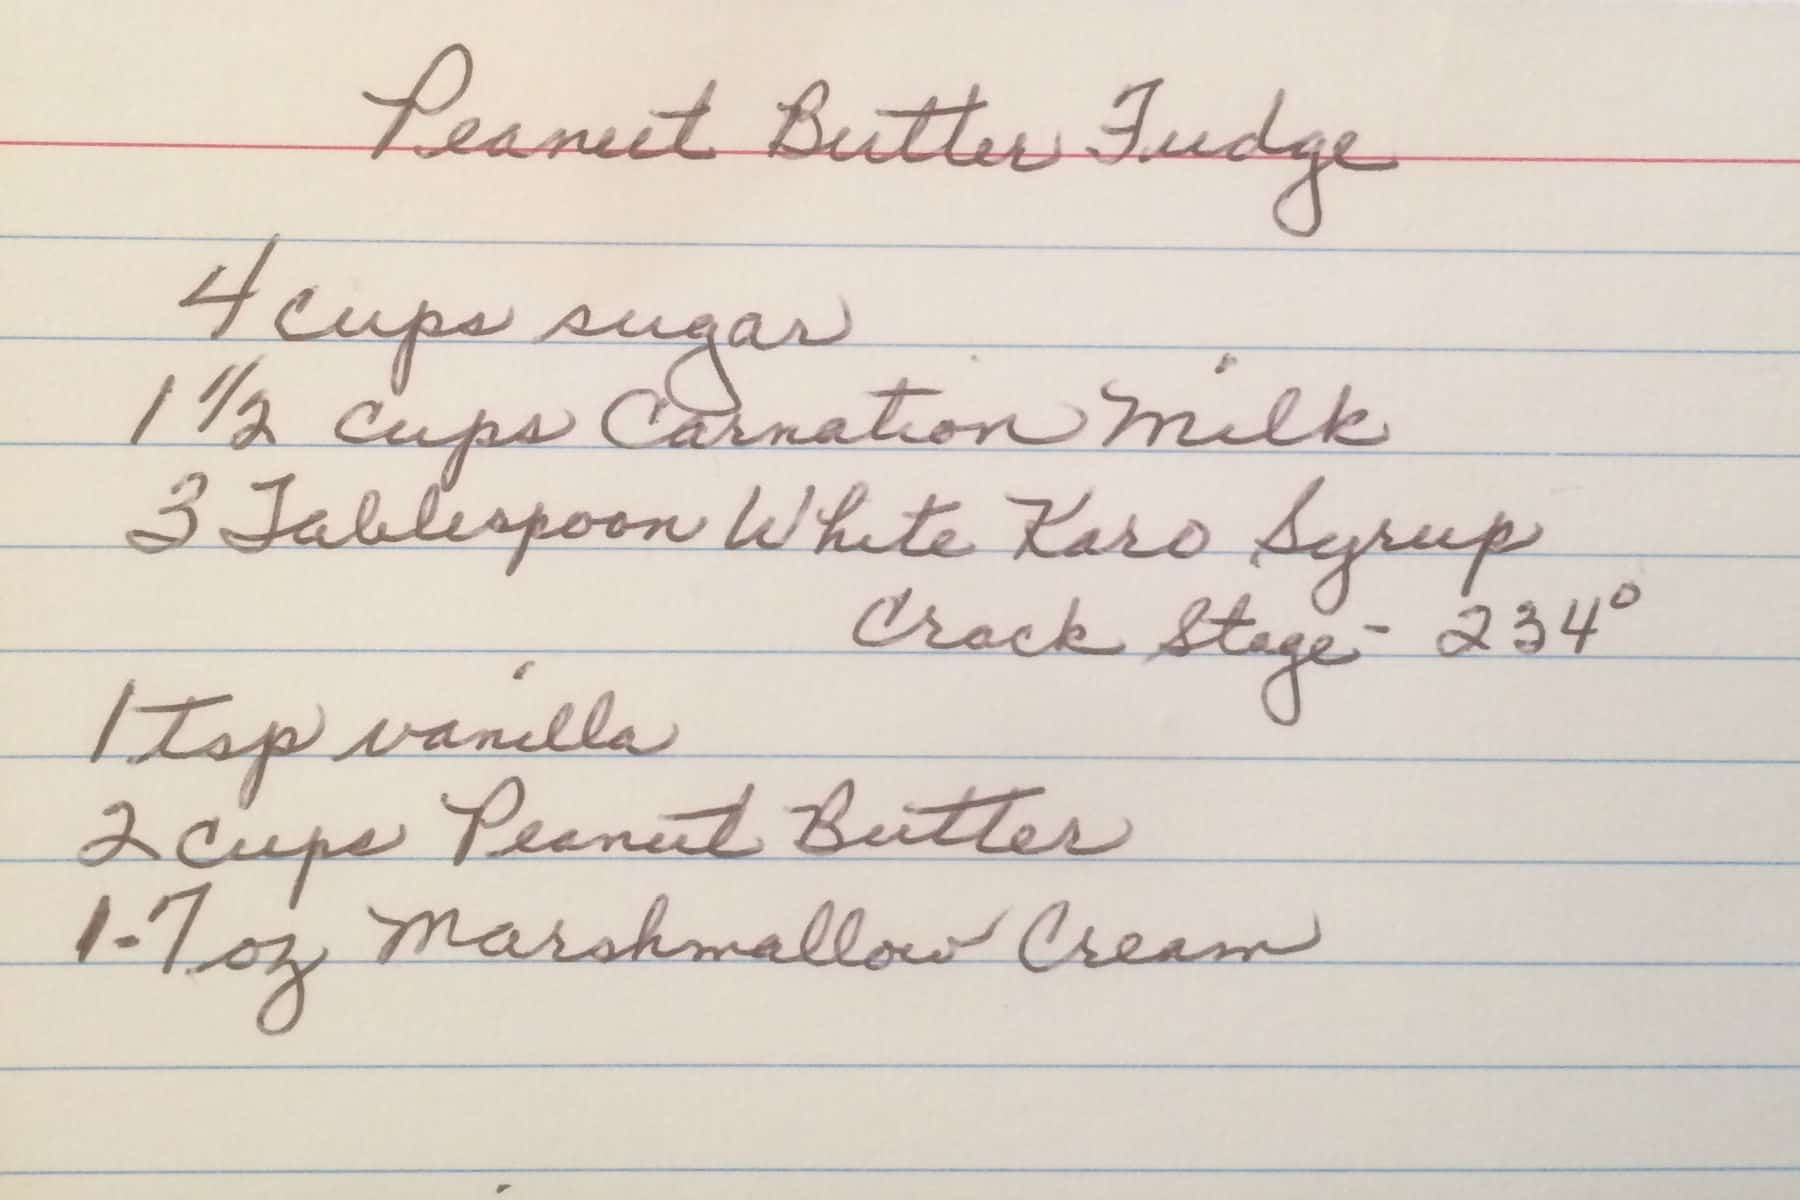 recipe card for peanut butter fudge, in original handwriting